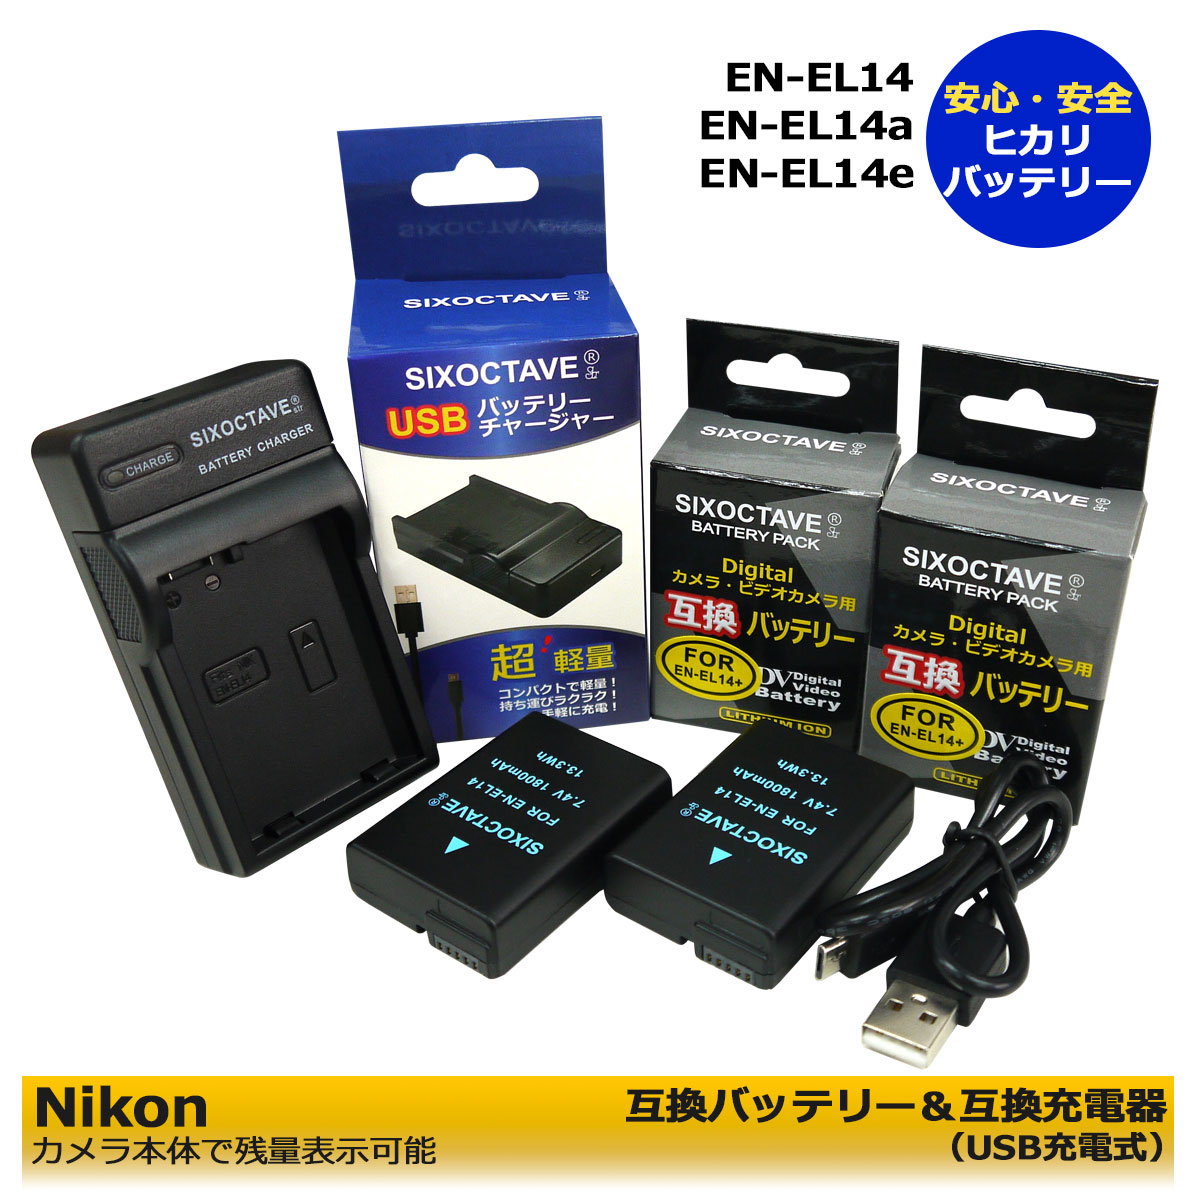 絶妙なデザイン 新品 Nikon EN-14 EN-EL14a USB付き 互換充電器